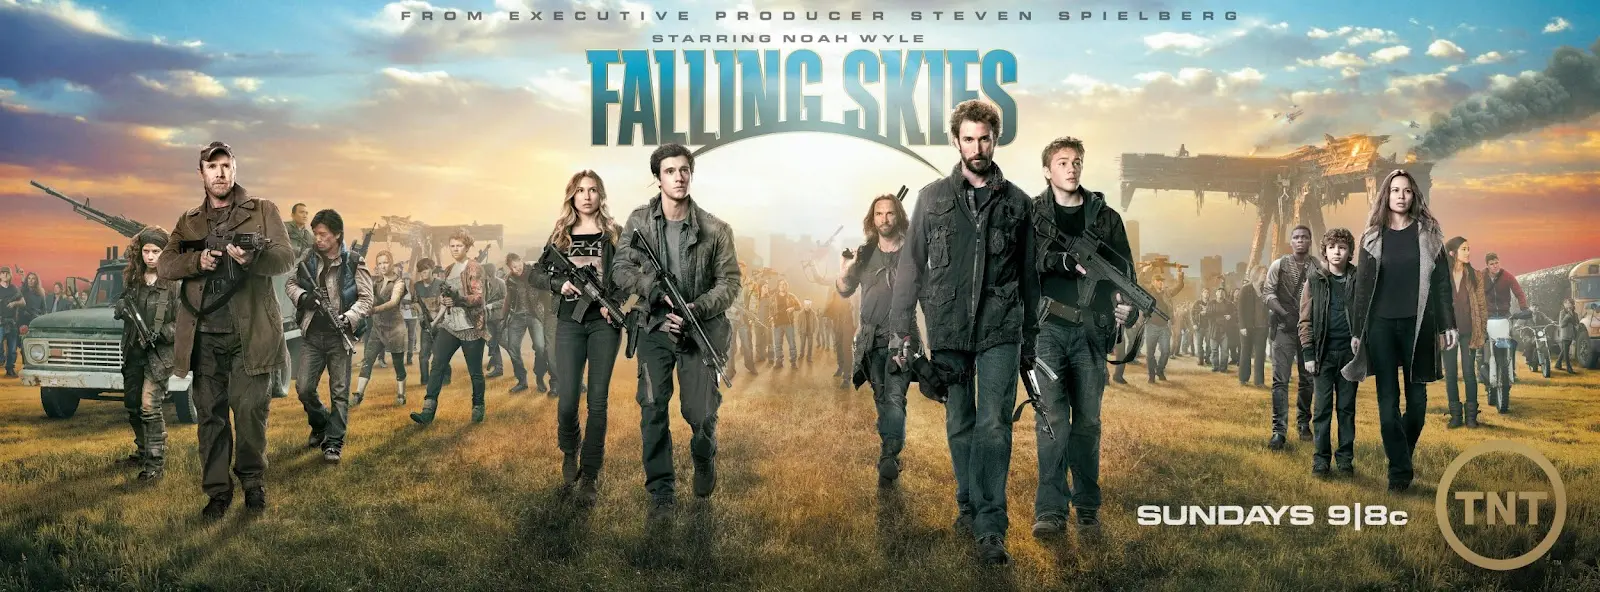 TV Show Falling Skies wallpaper 18 | Background Image